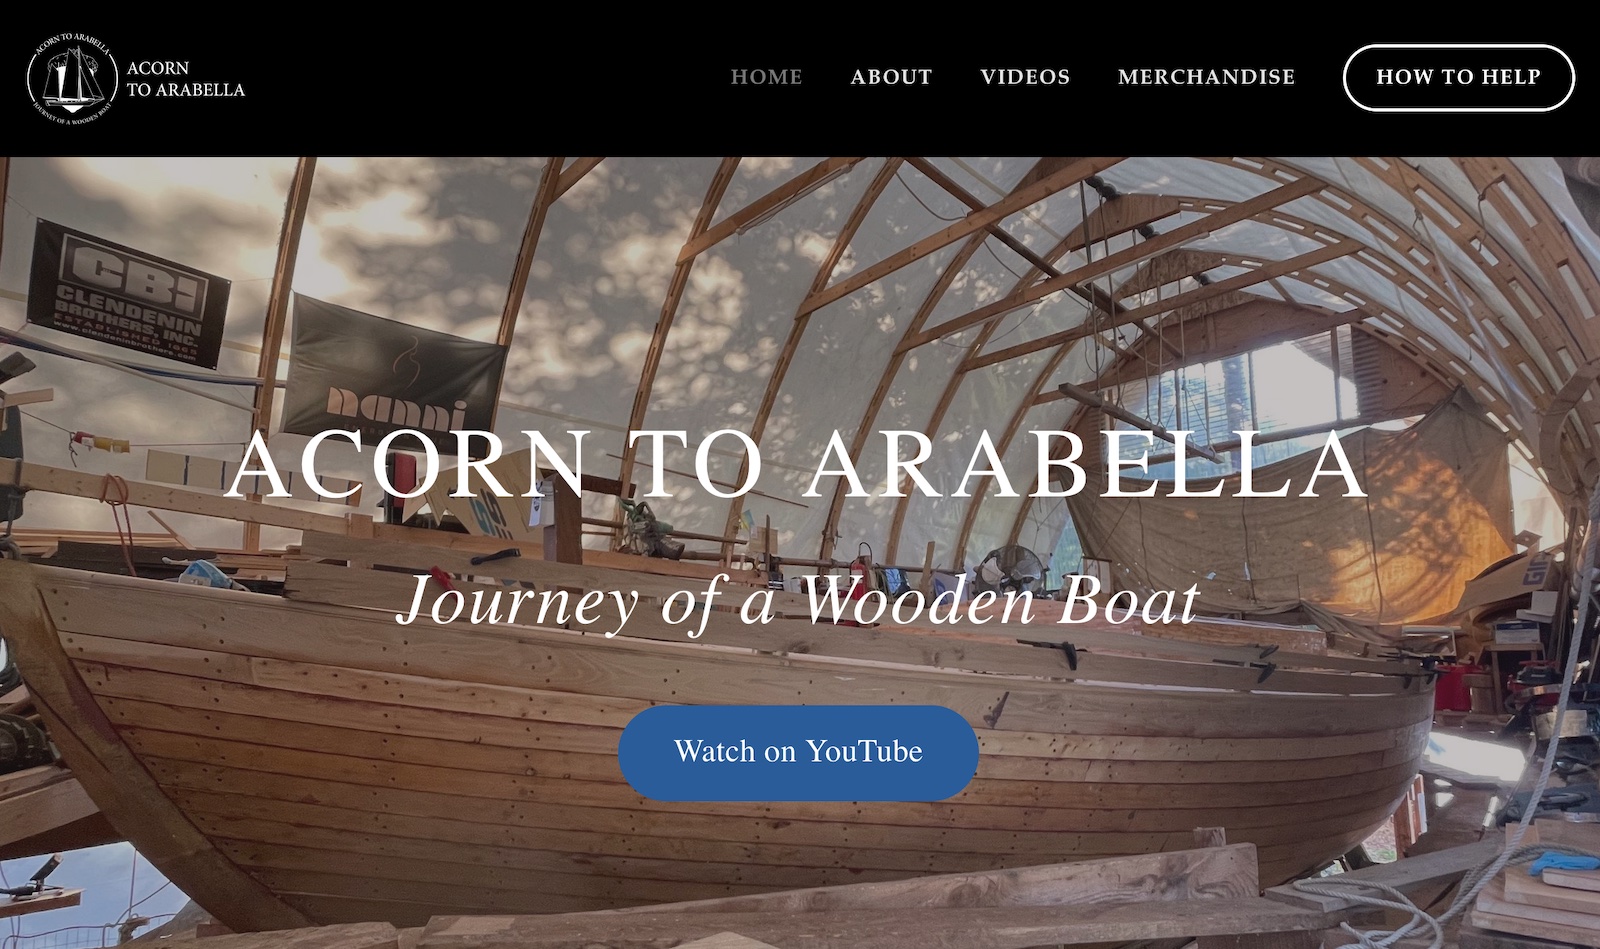 A screen-grab of Arabella's home page - acorntoarabella.com